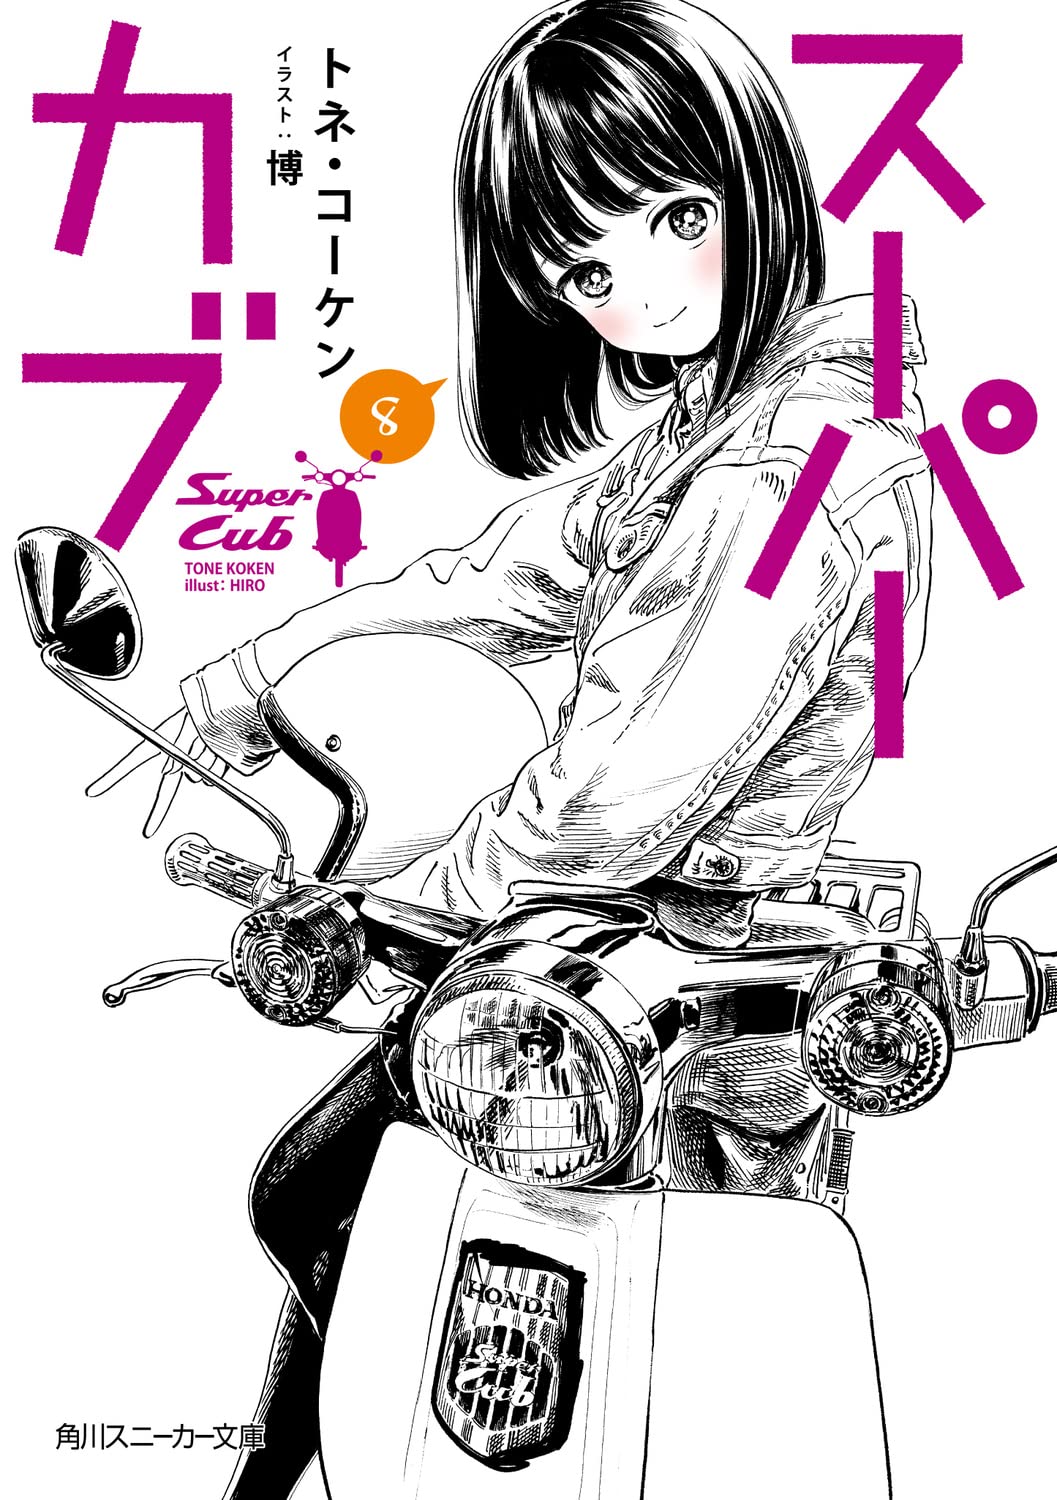 Manga Mogura RE on Twitter: "Light Novel "Super Cub" final vol 8 by Tone  Koken, Hiro https://t.co/GFRl4scxbI" / Twitter